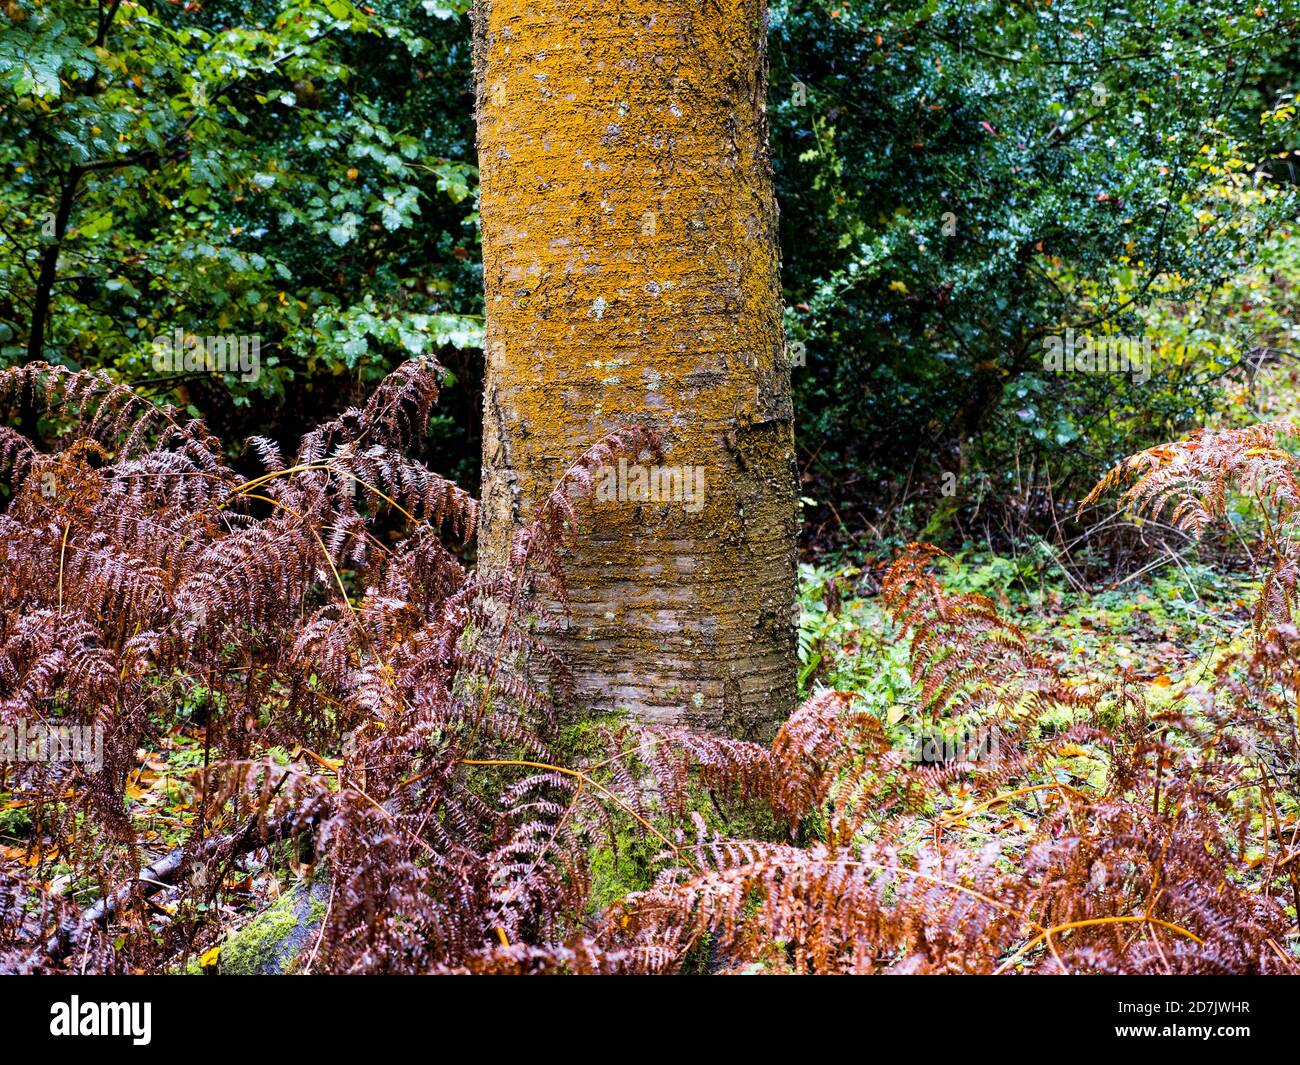 Lichen buena calidad del aire, paisaje del bosque de otoño, Lichen amarillo, maderas, esquina de las marcas, Oxfordshire, Inglaterra, Reino Unido, GB. Foto de stock